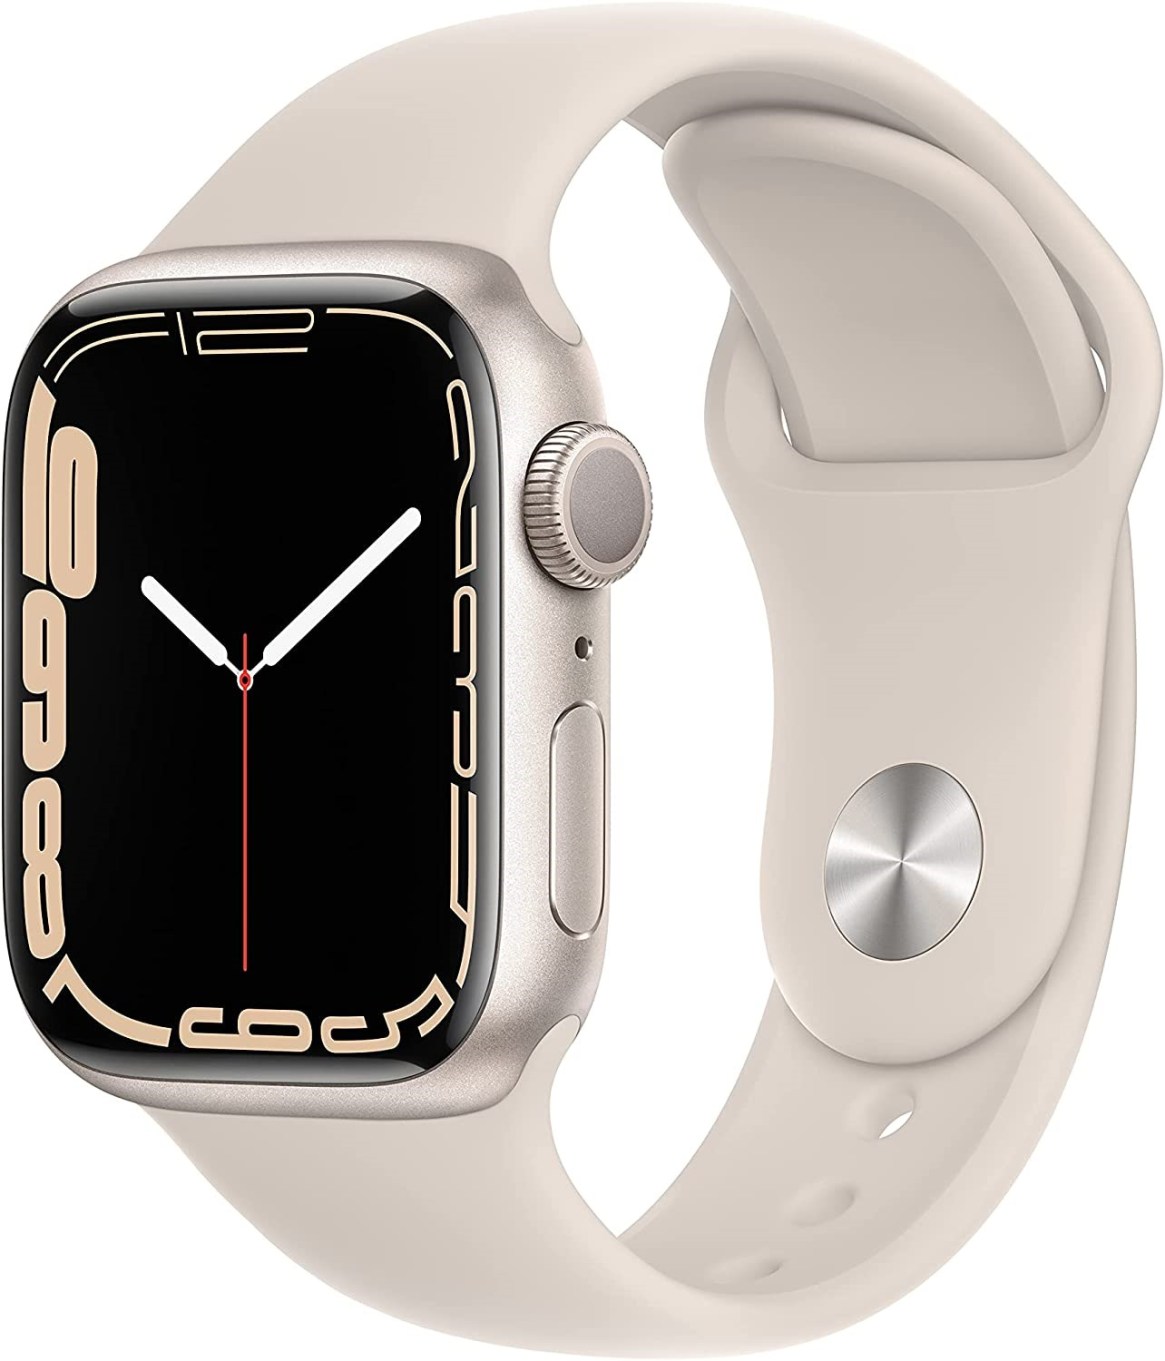 Apple Watch Series 7 Source Apple